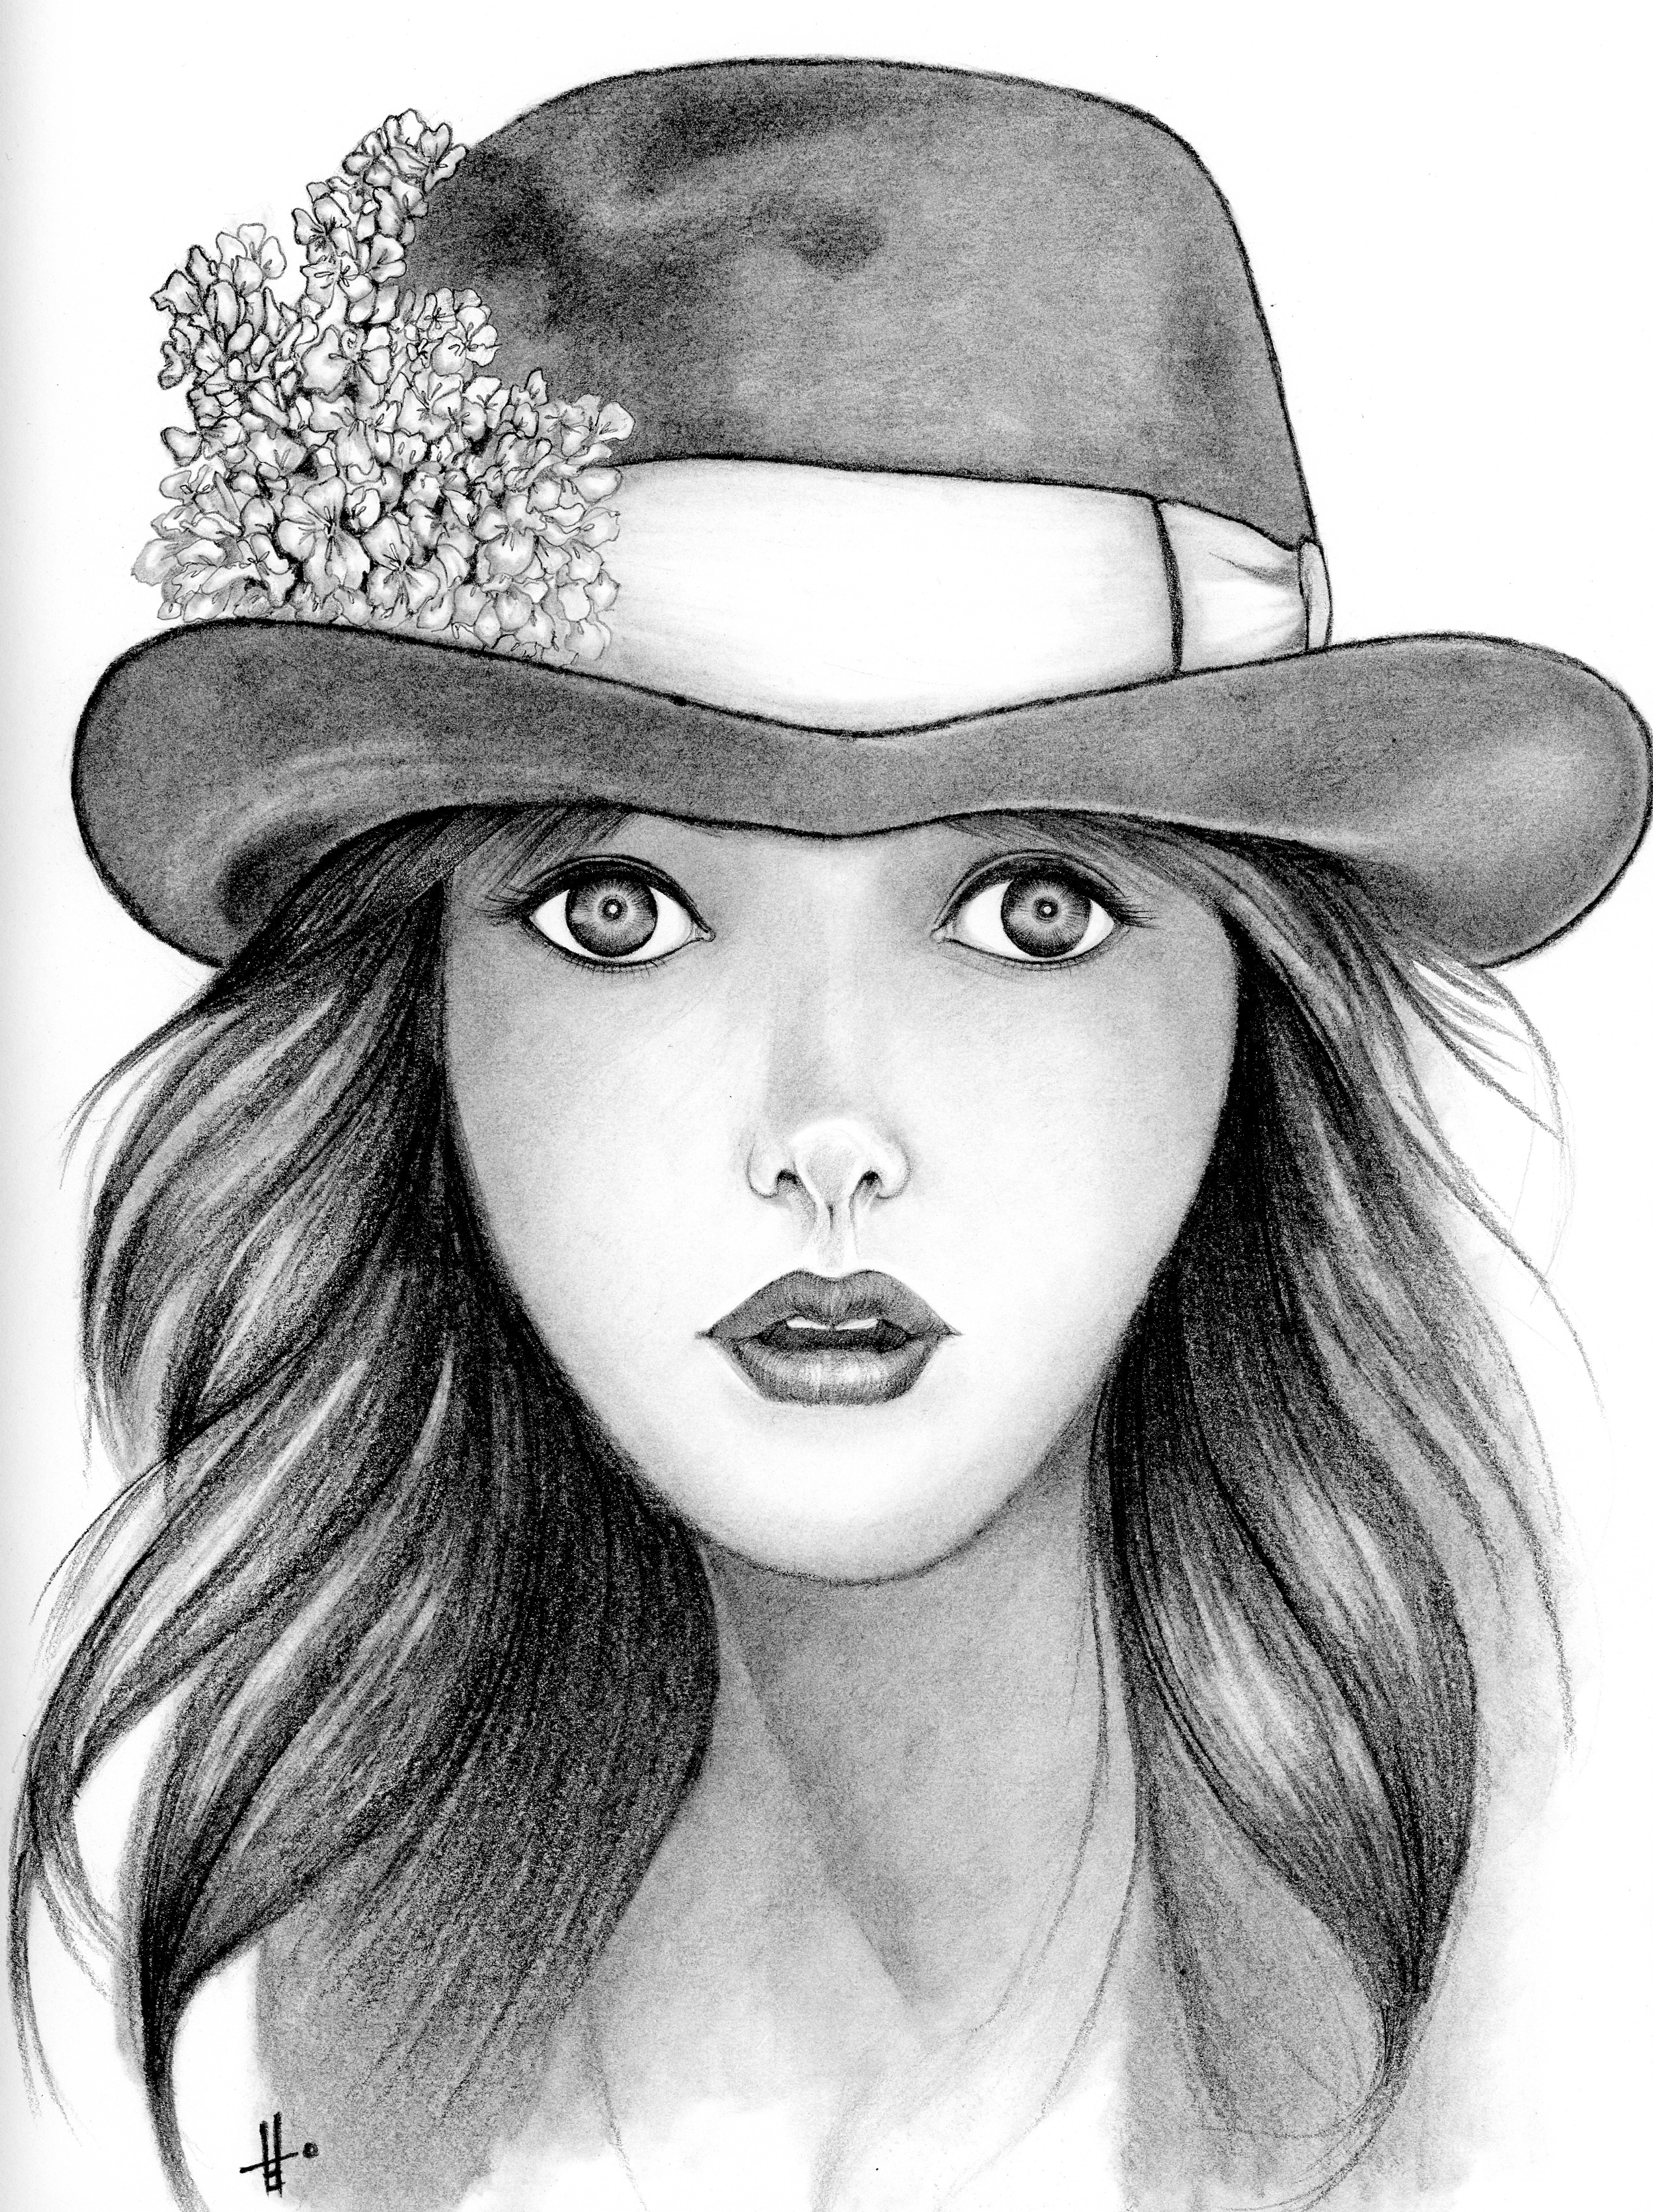  Girl  Portrait Sketch  at PaintingValley com Explore 